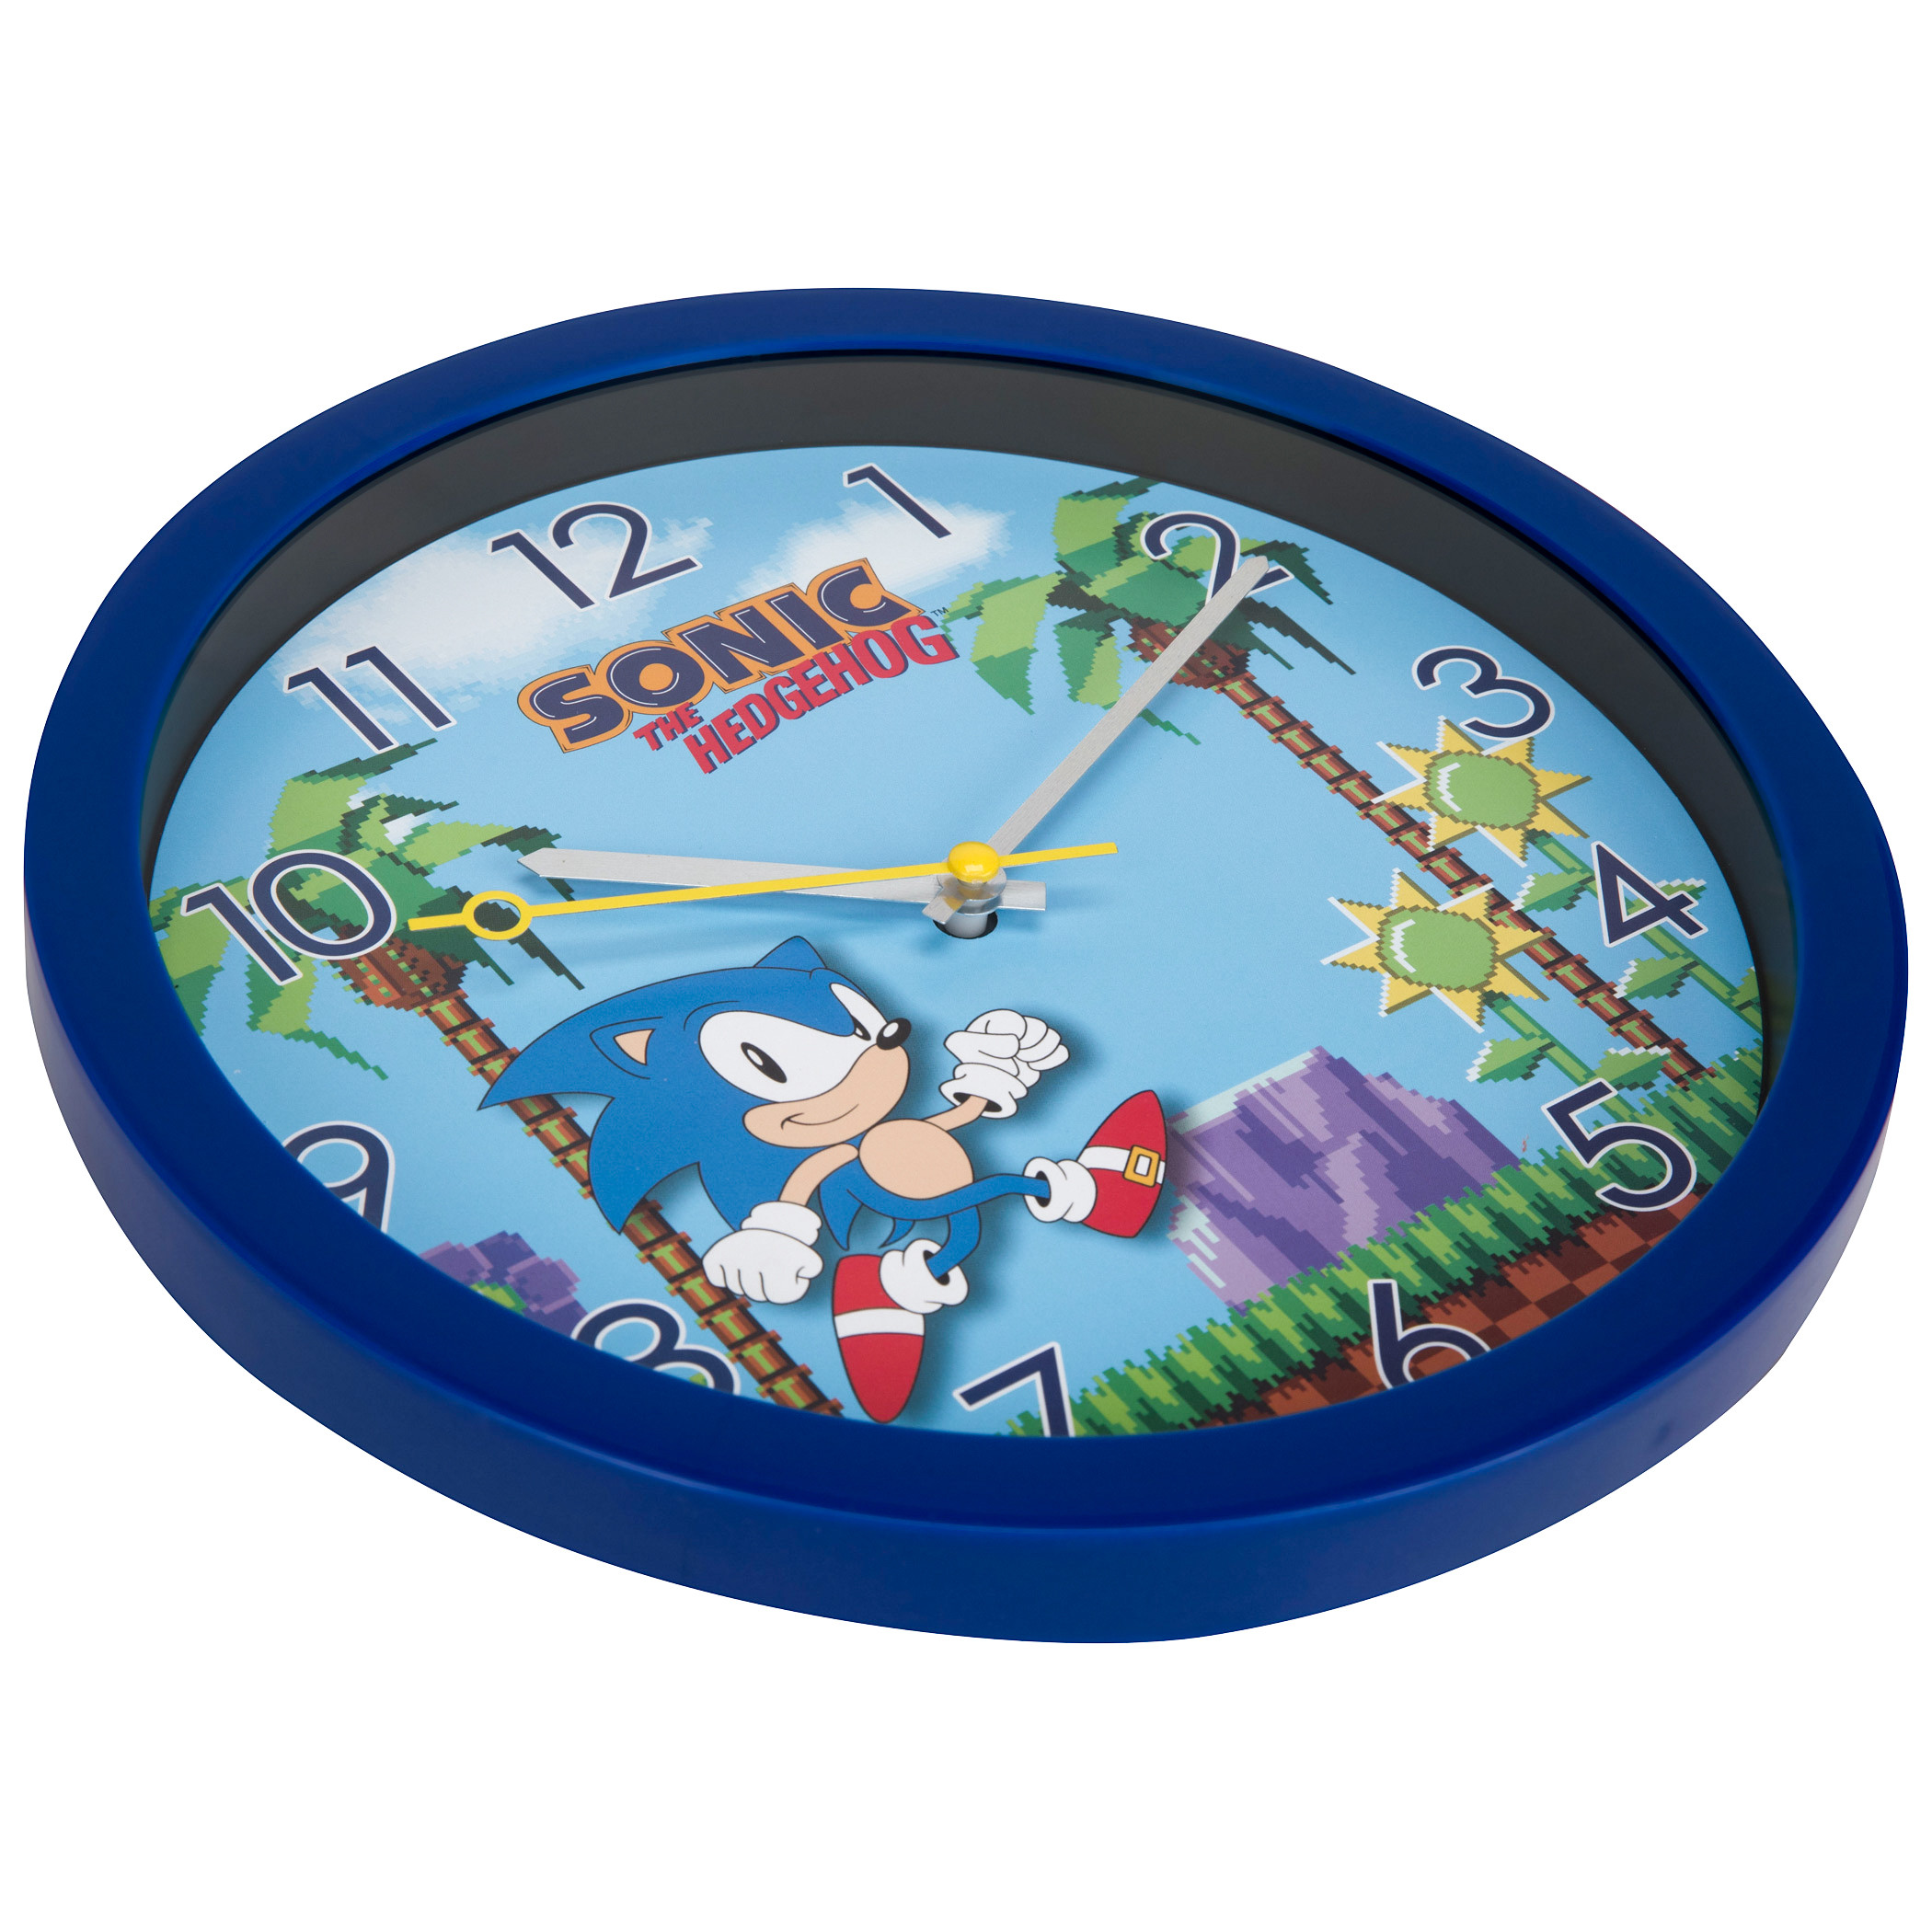 Sonic the Hedgehog Green Hill Zone 12" Wall Clock